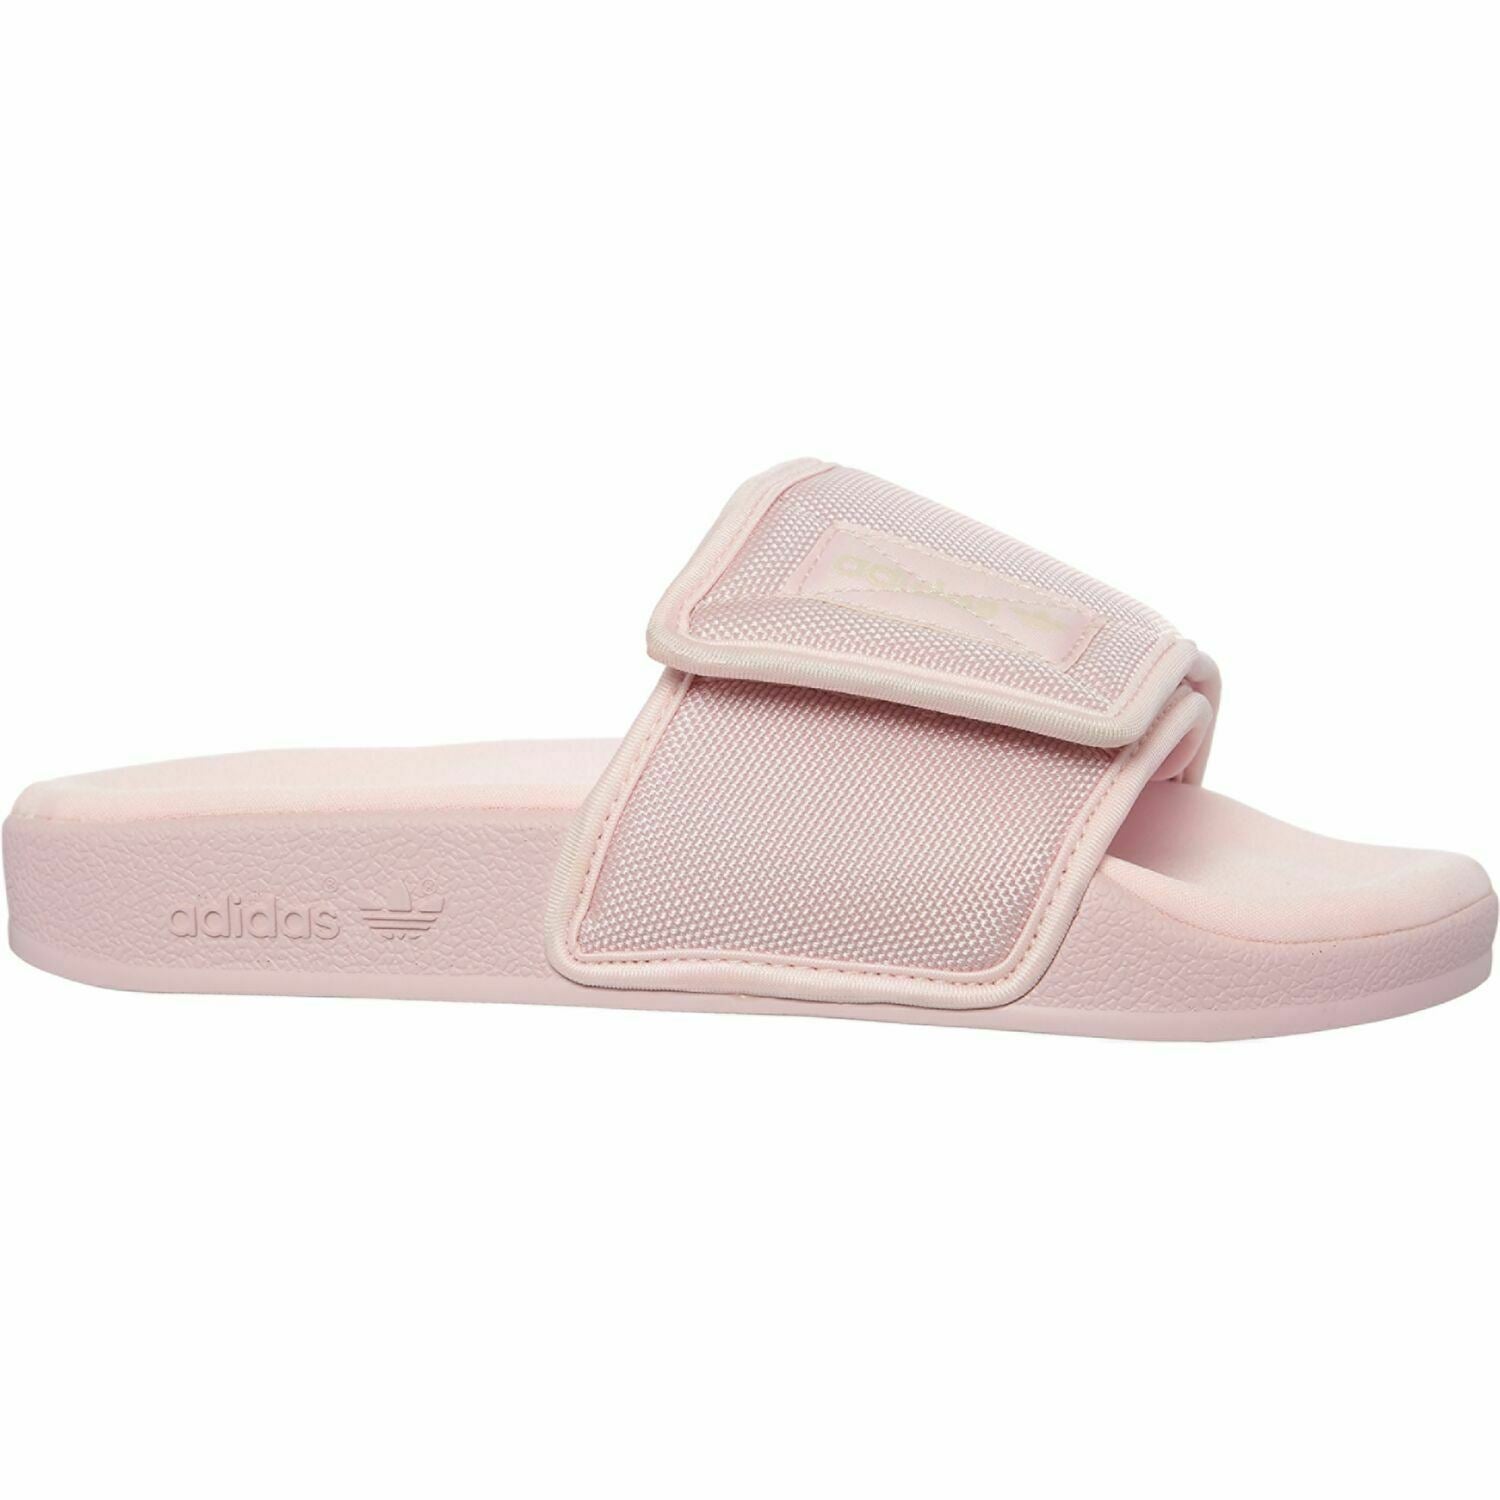 ADIDAS Women's Adilette Breezer Sliders Sandals, Pink, UK 4 EU 37